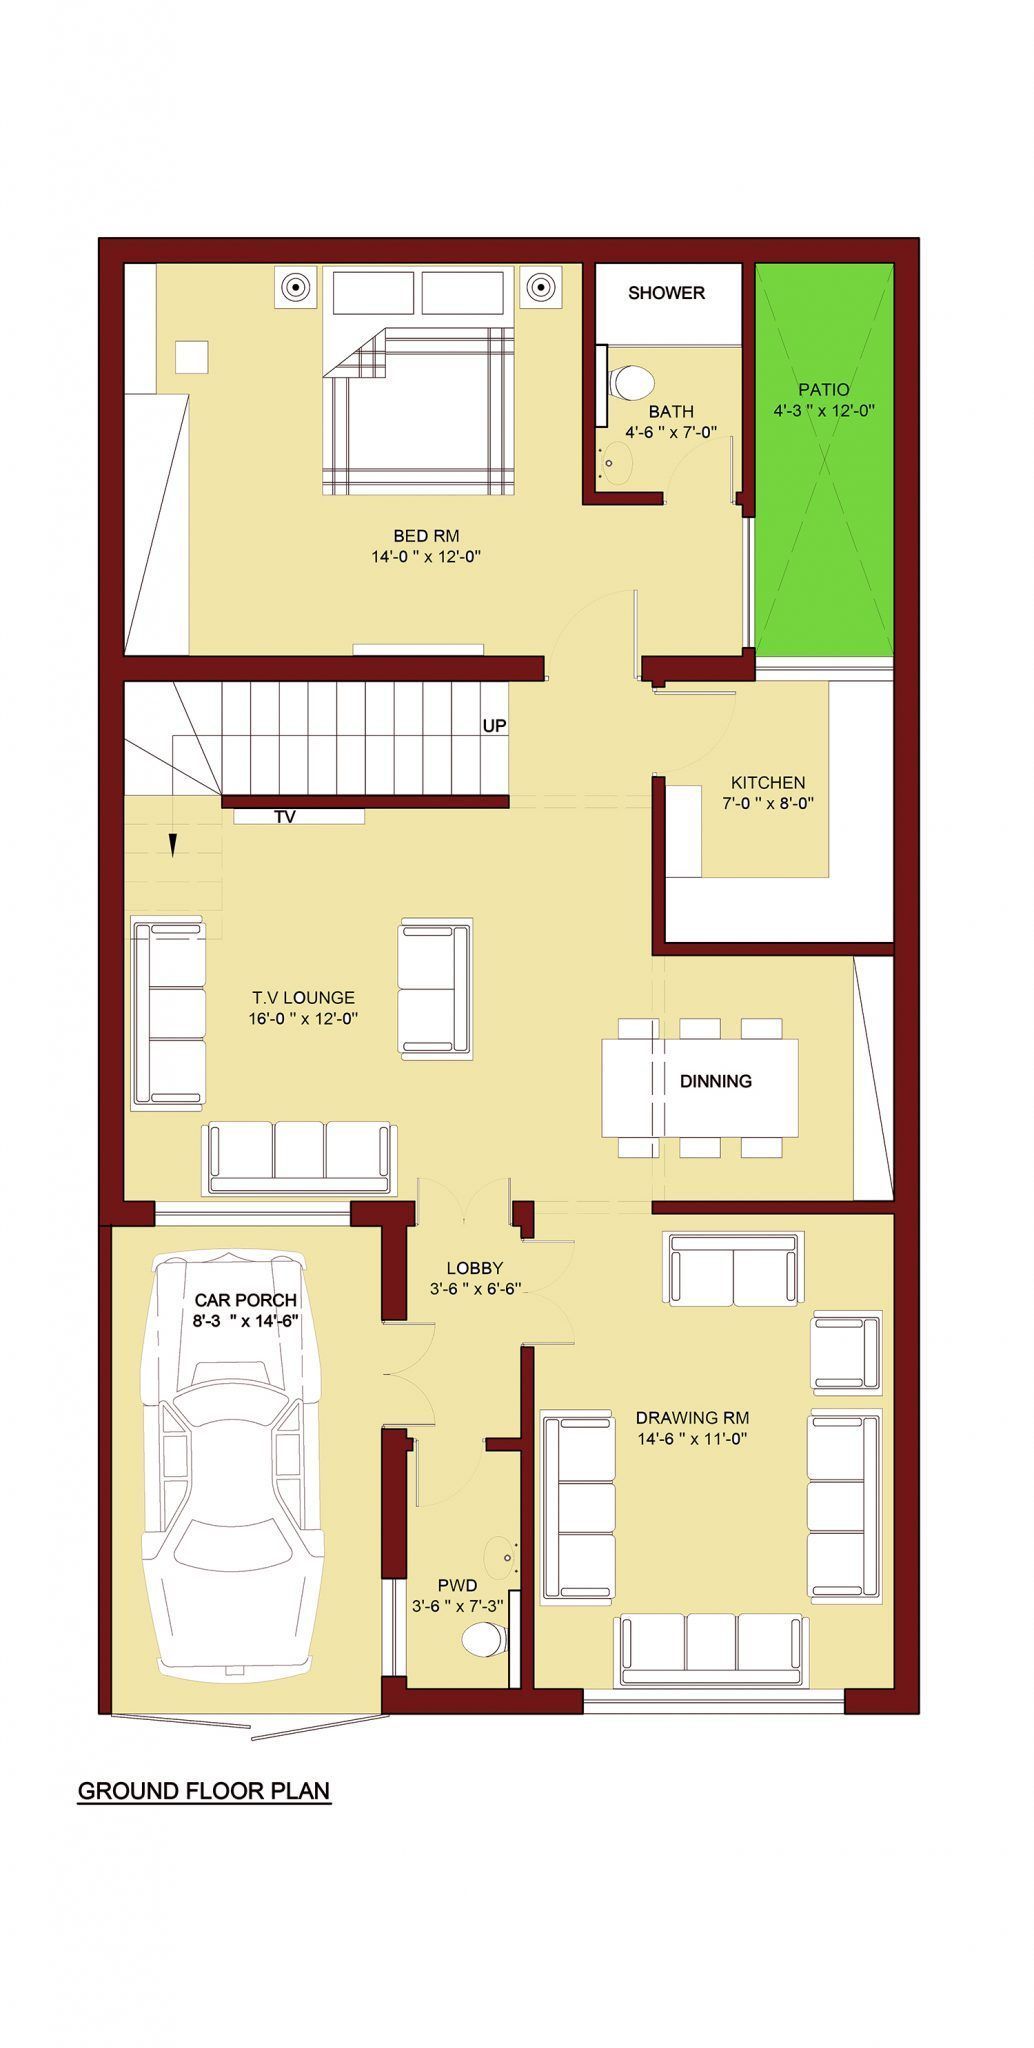 5 Marla House Design Layout 2bhk house plan, 5 marla